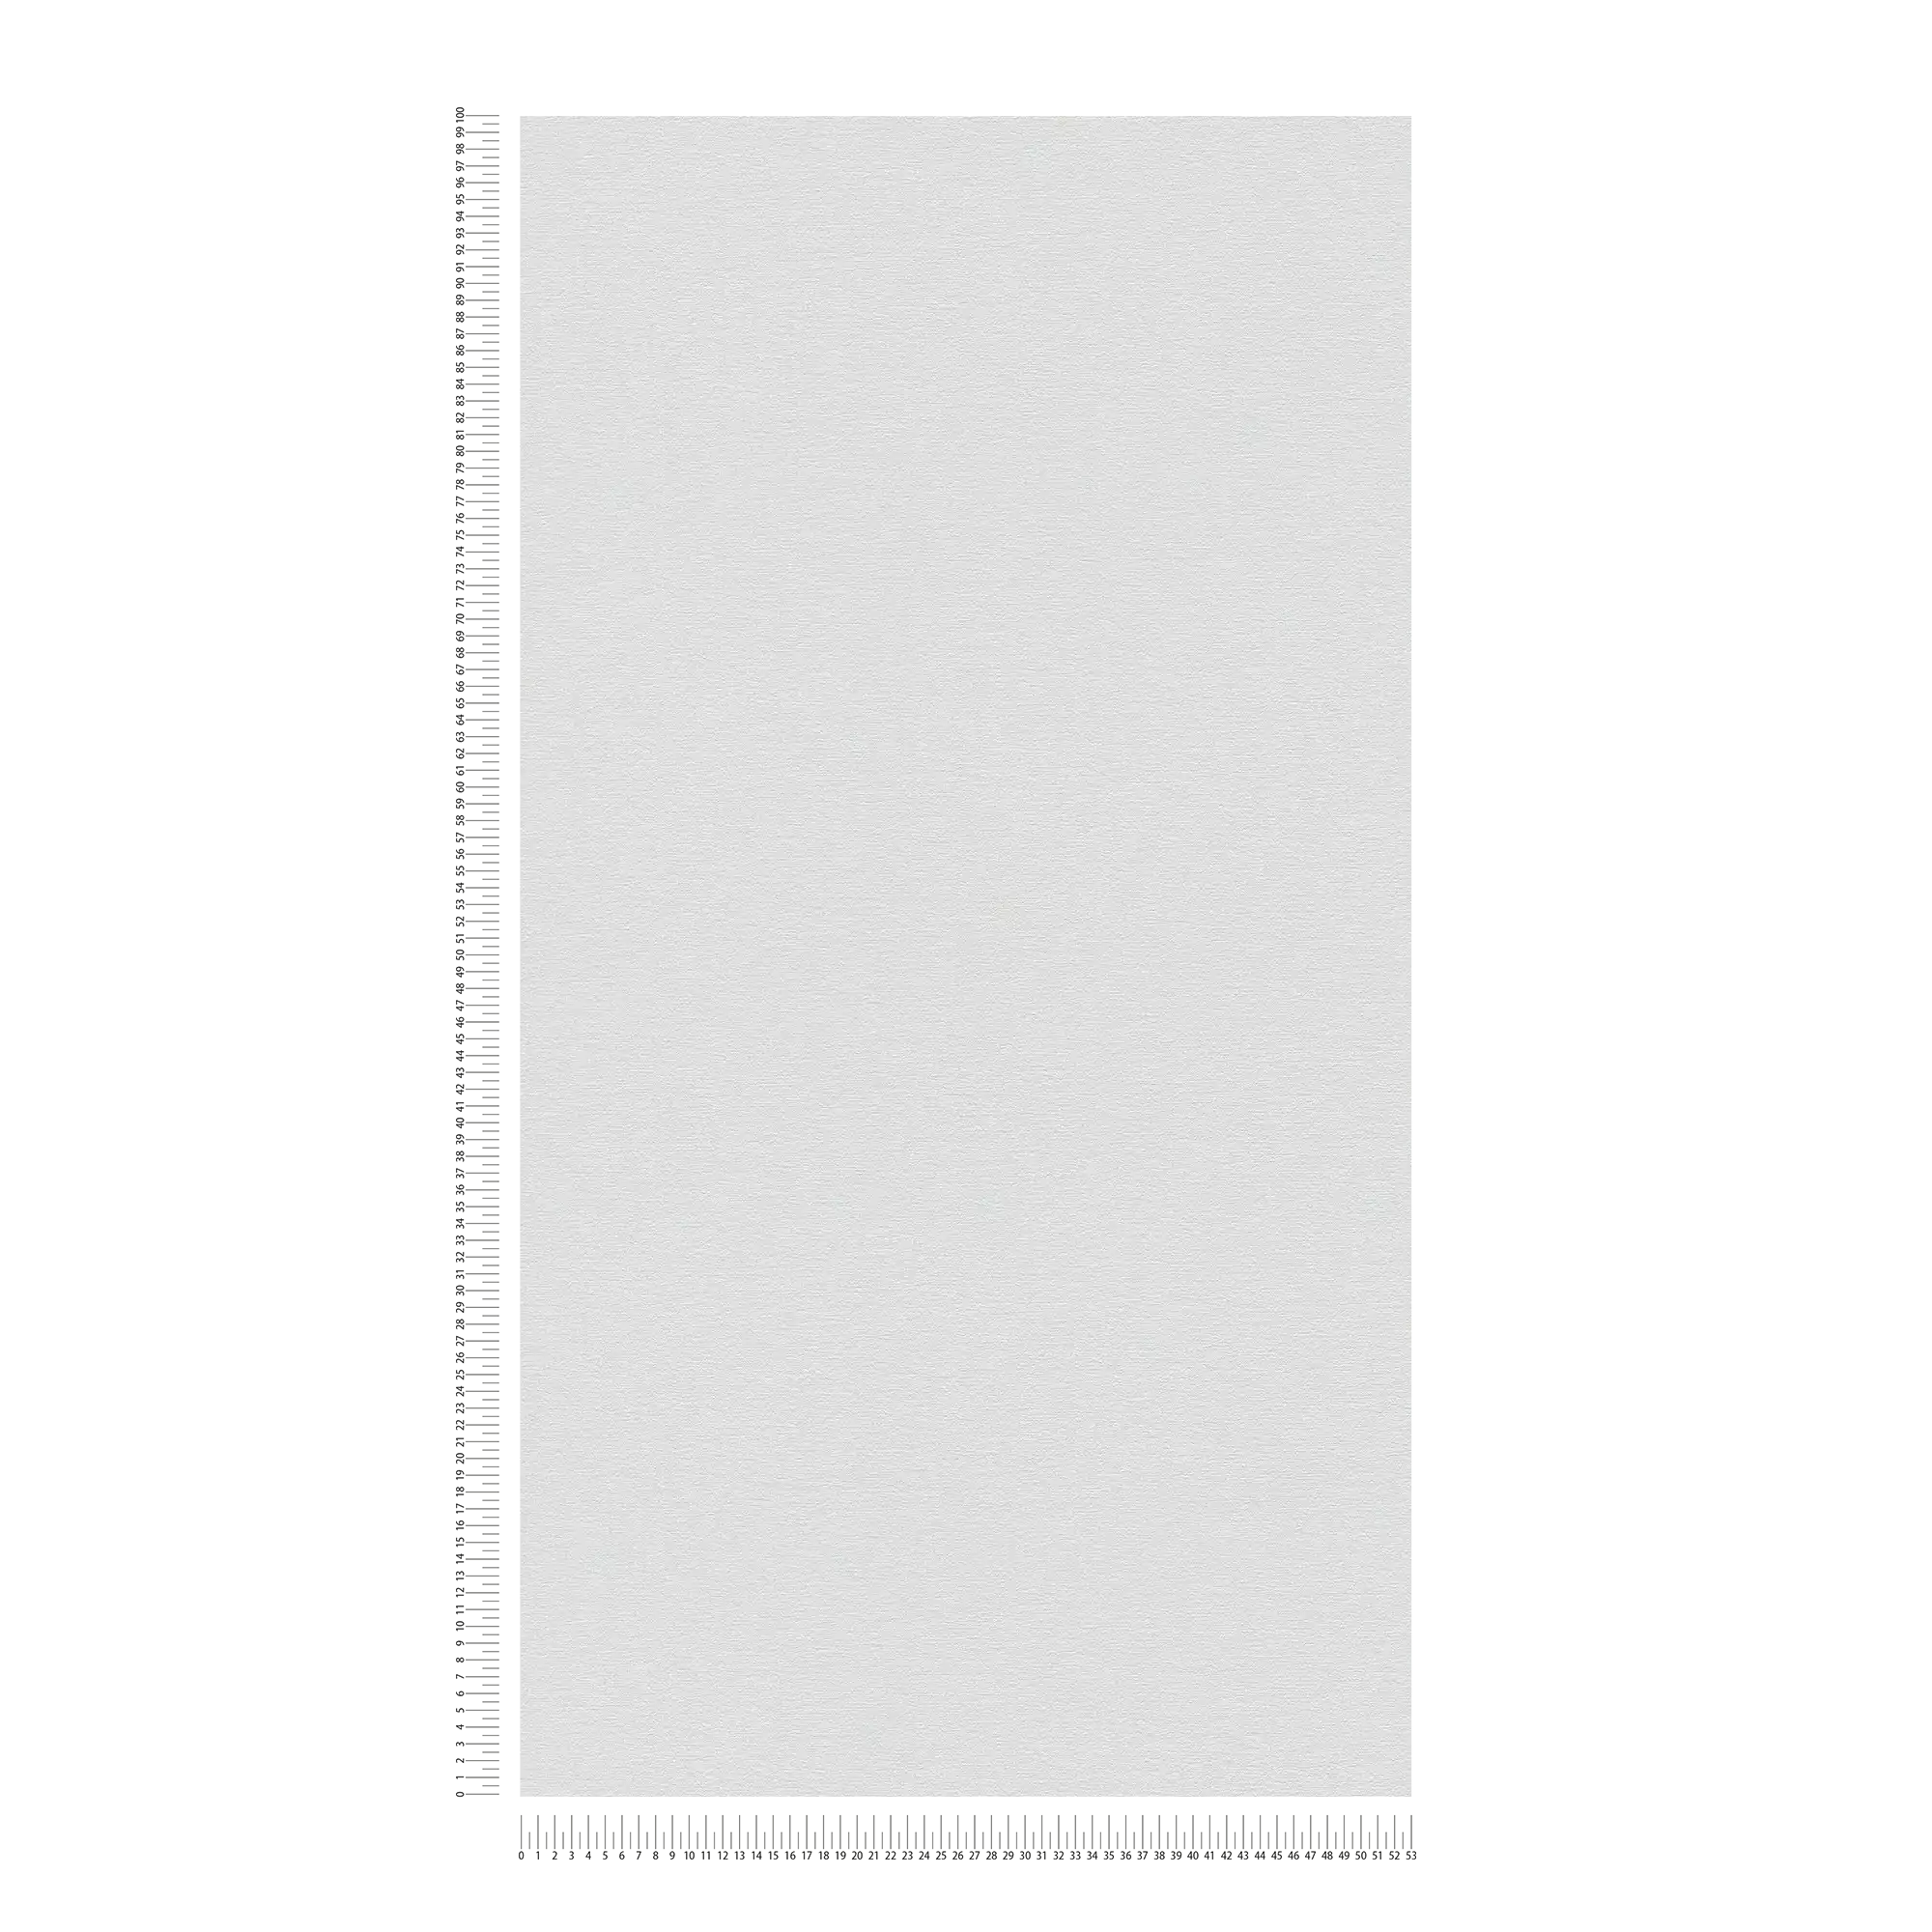             Lightly textured plain wallpaper in a matt look - white
        